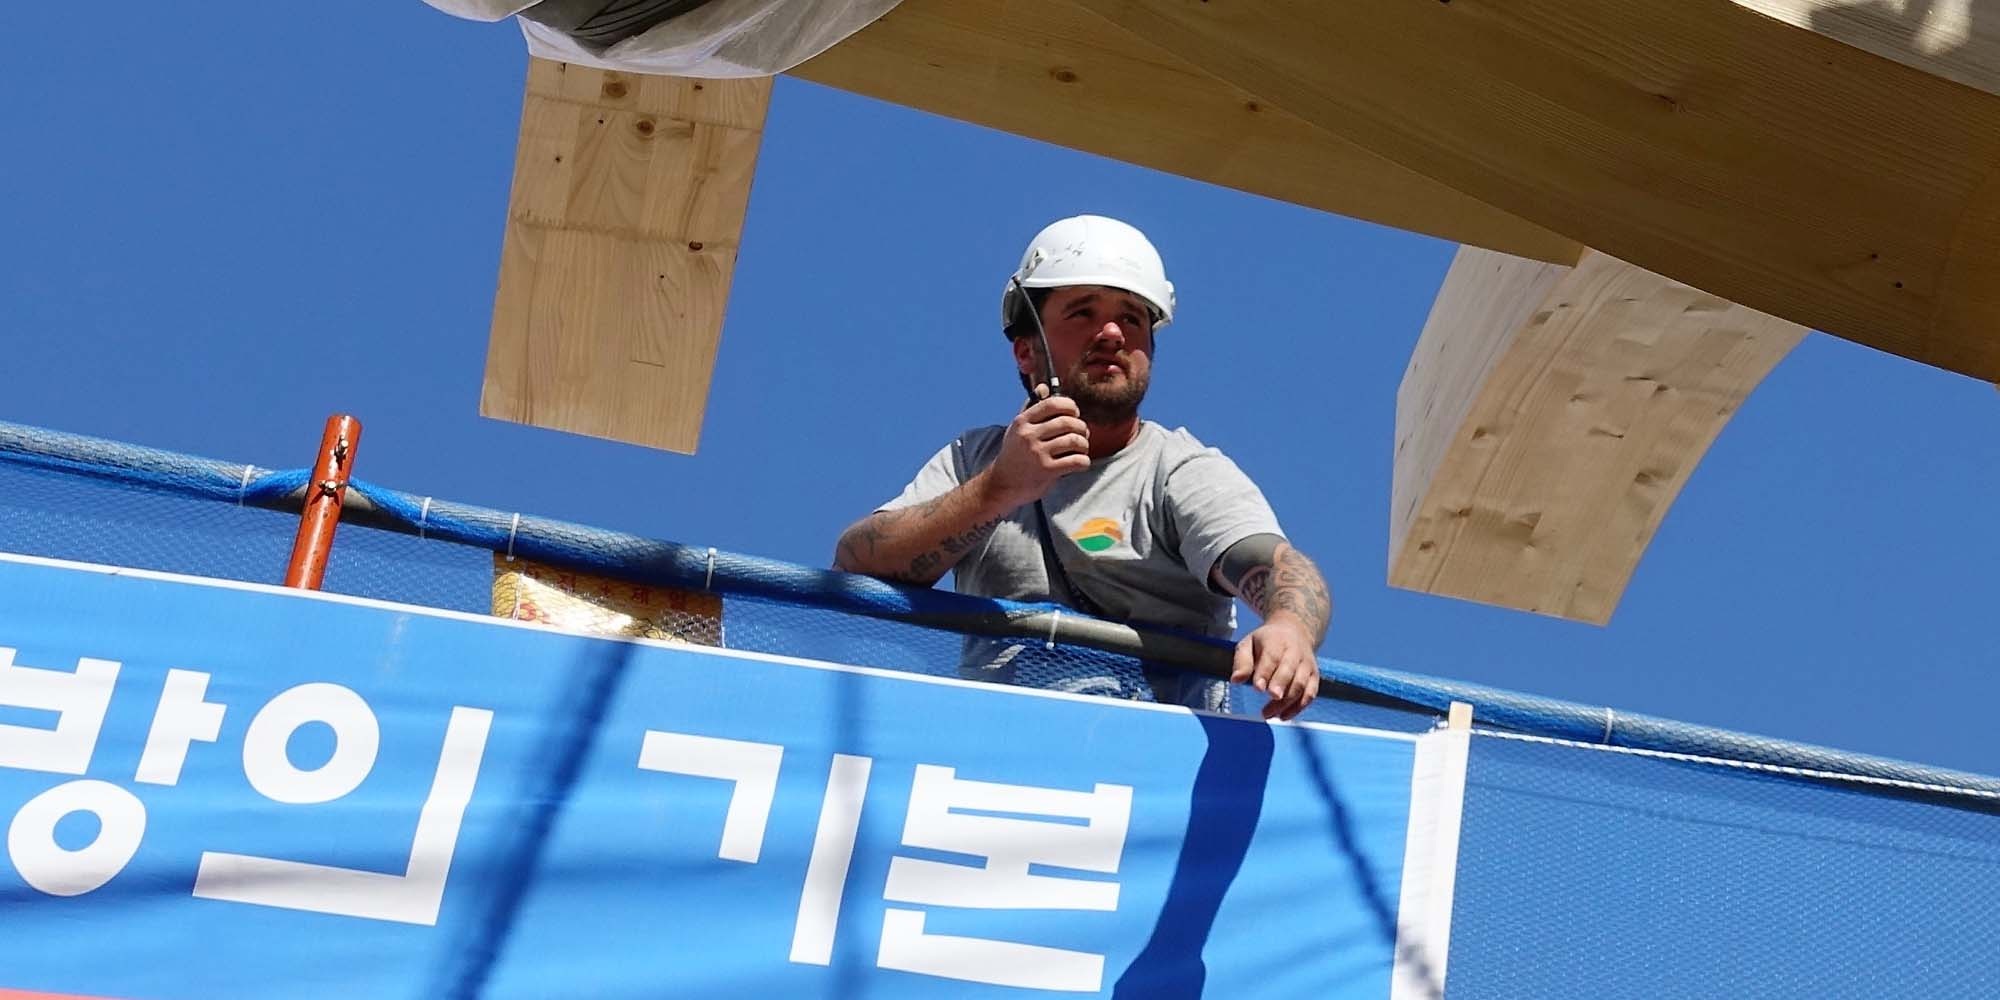 Carpenter/installer on an international construction site holding a radio